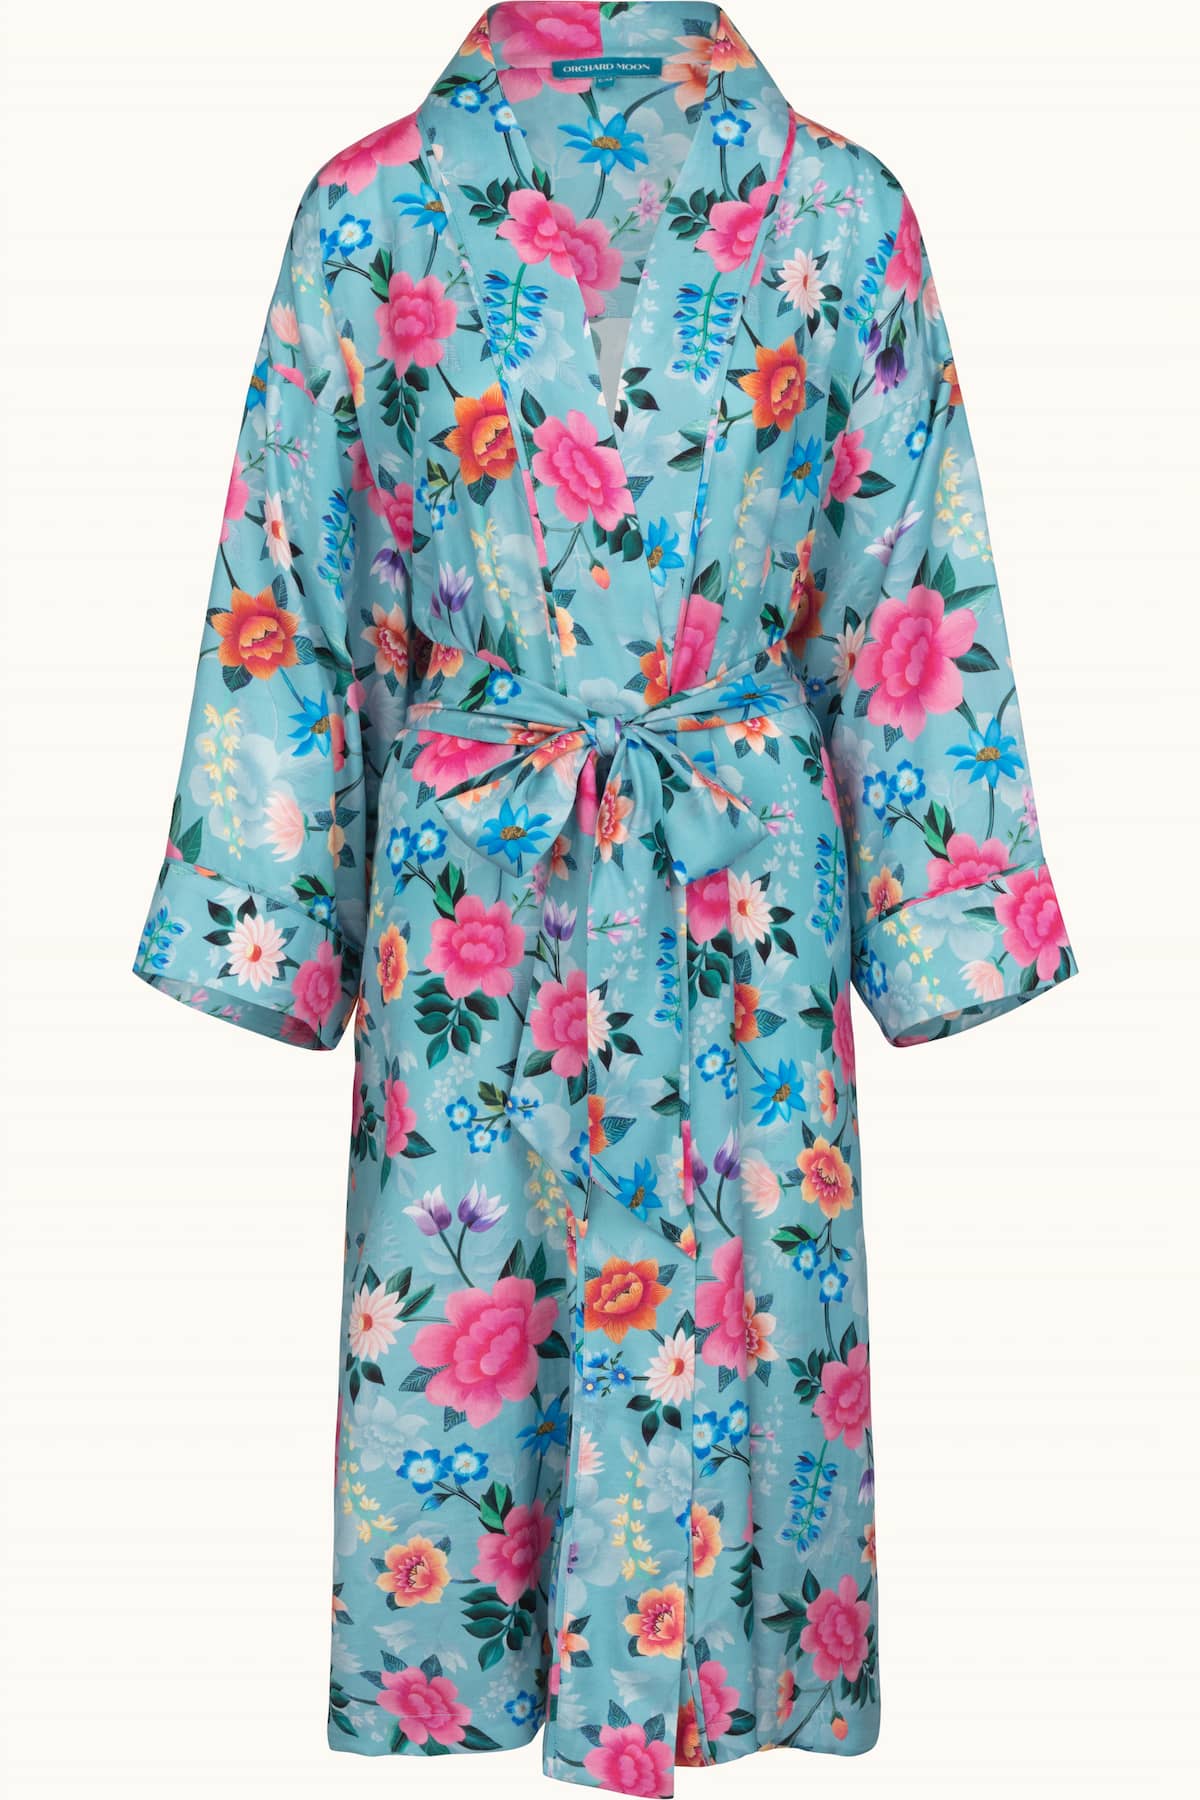 Elizabeth - Kimono Robes - Flatlay 1 - Luxury Sustainable Kimono Robes - Orchard Moon